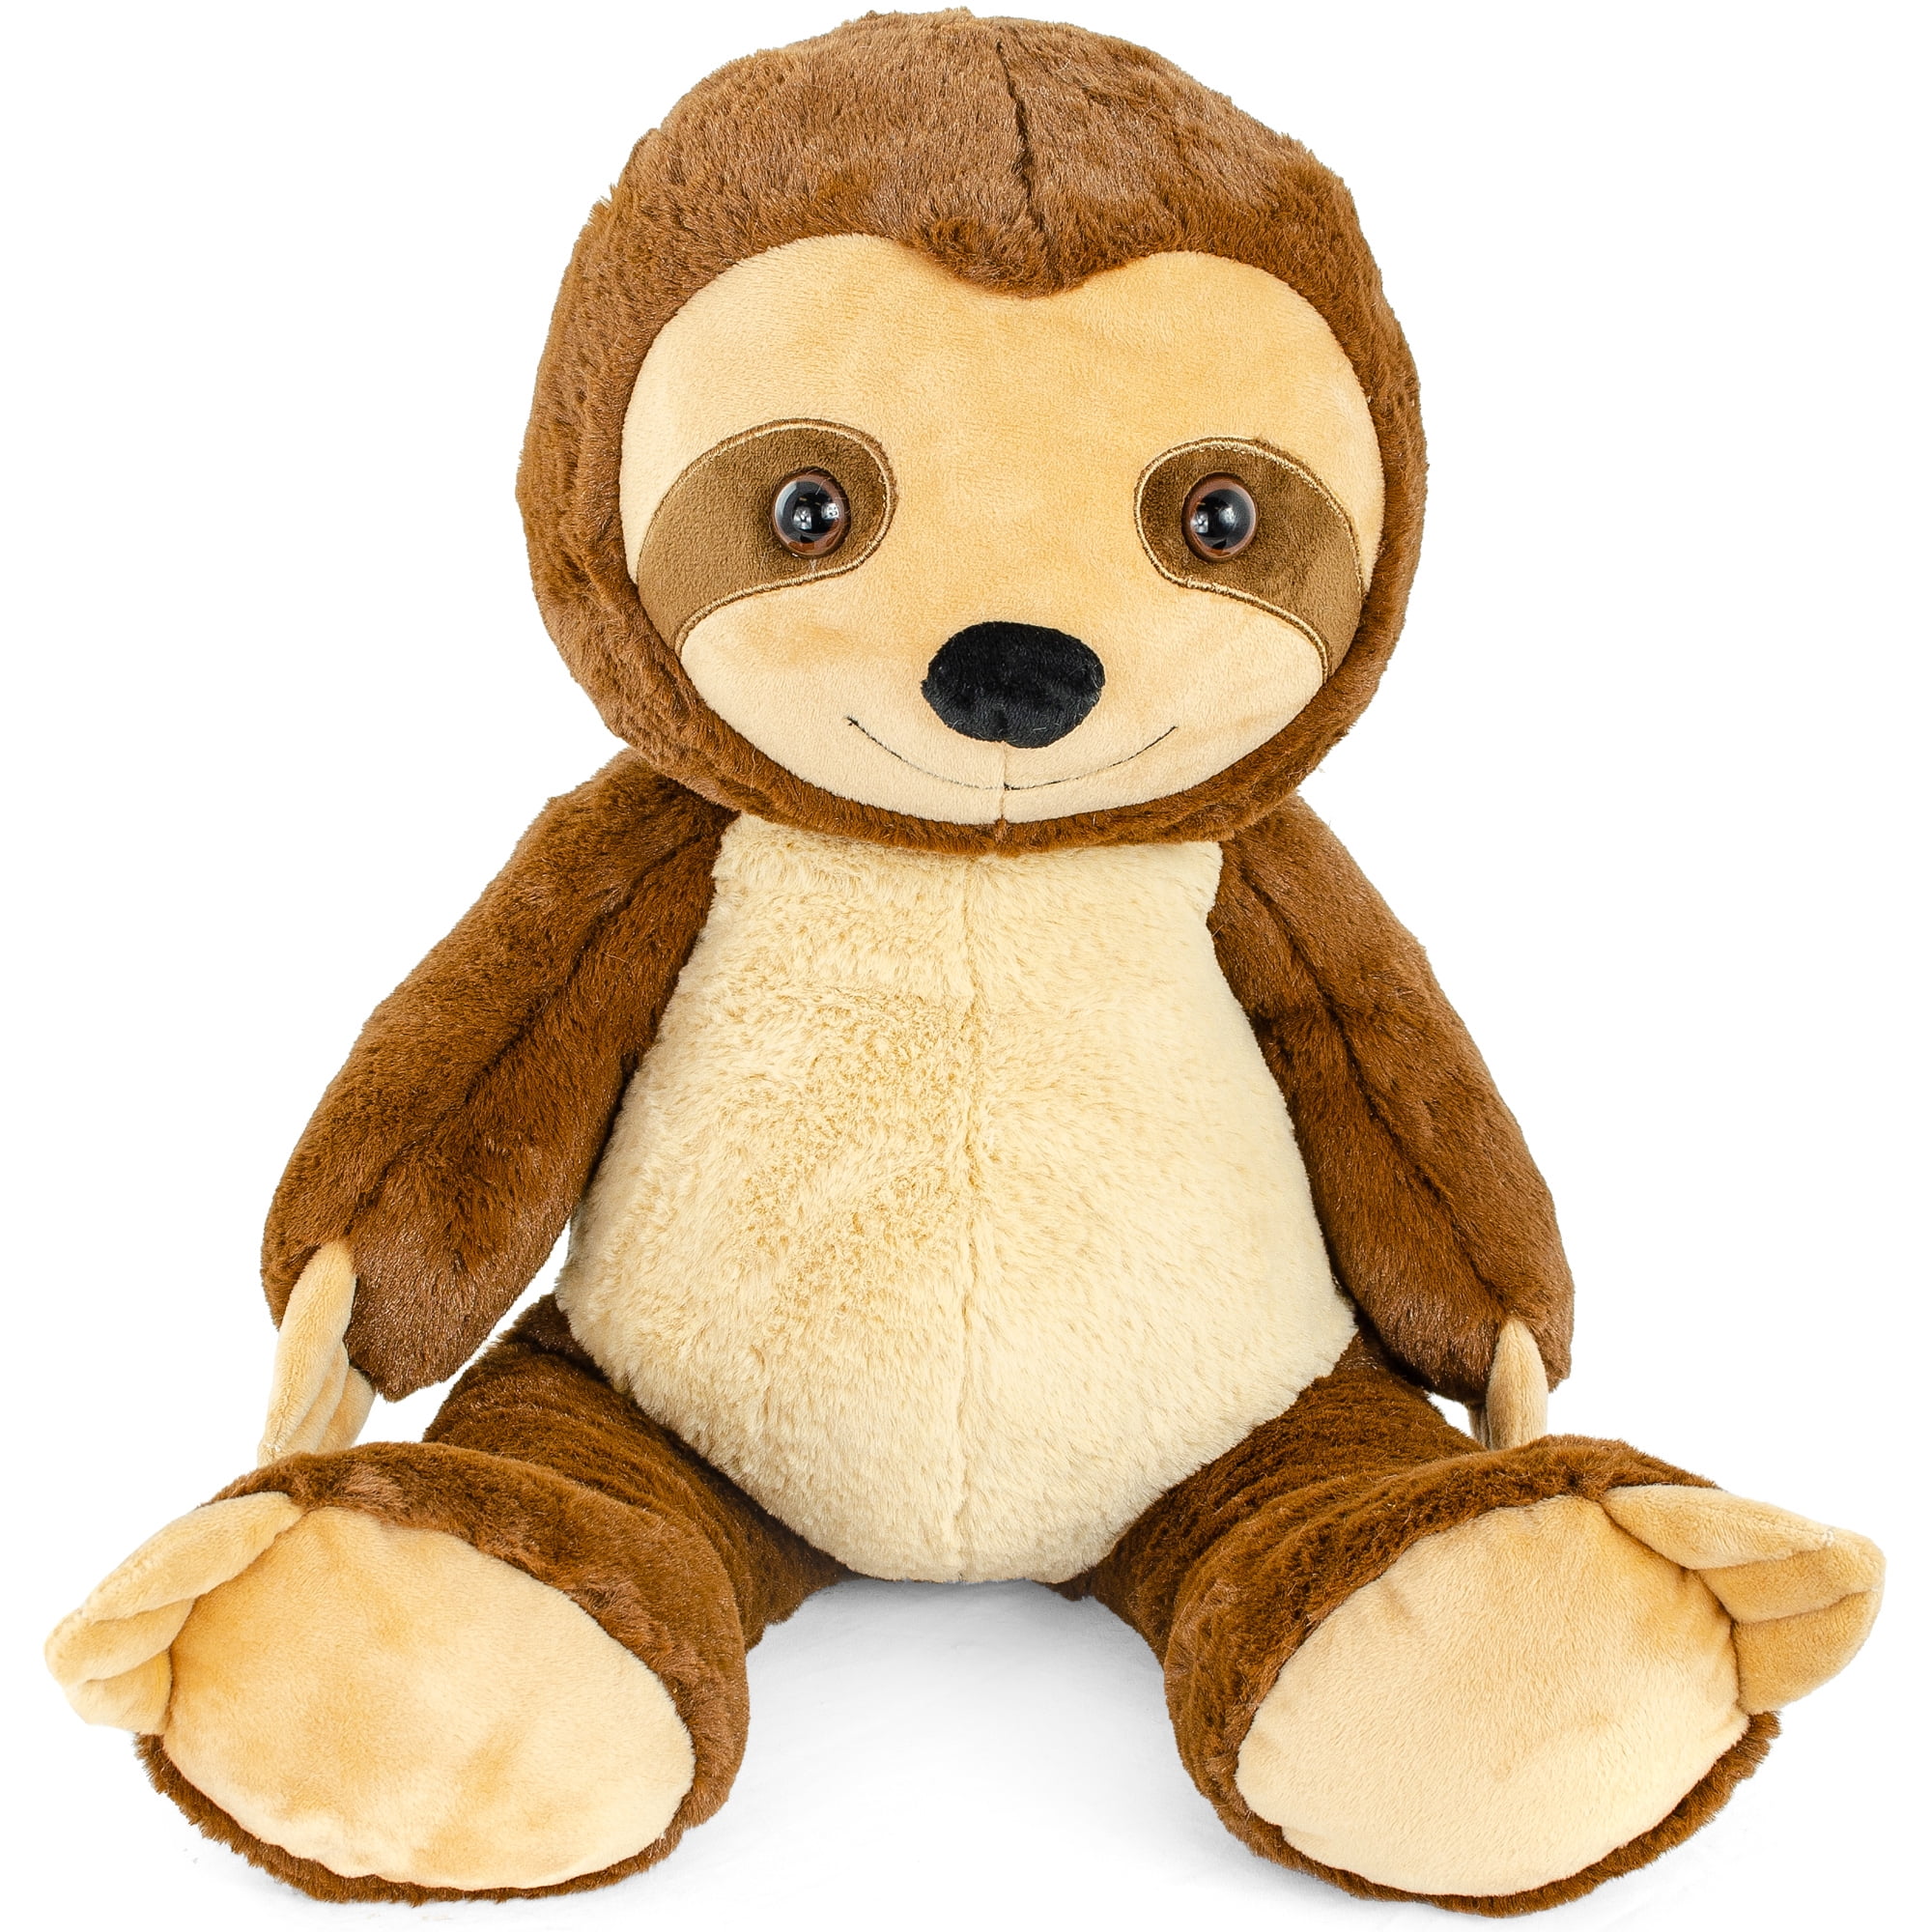 Super Soft Plush Sloth Stuffed Animal Toy, Adorable Slowpoke Of The